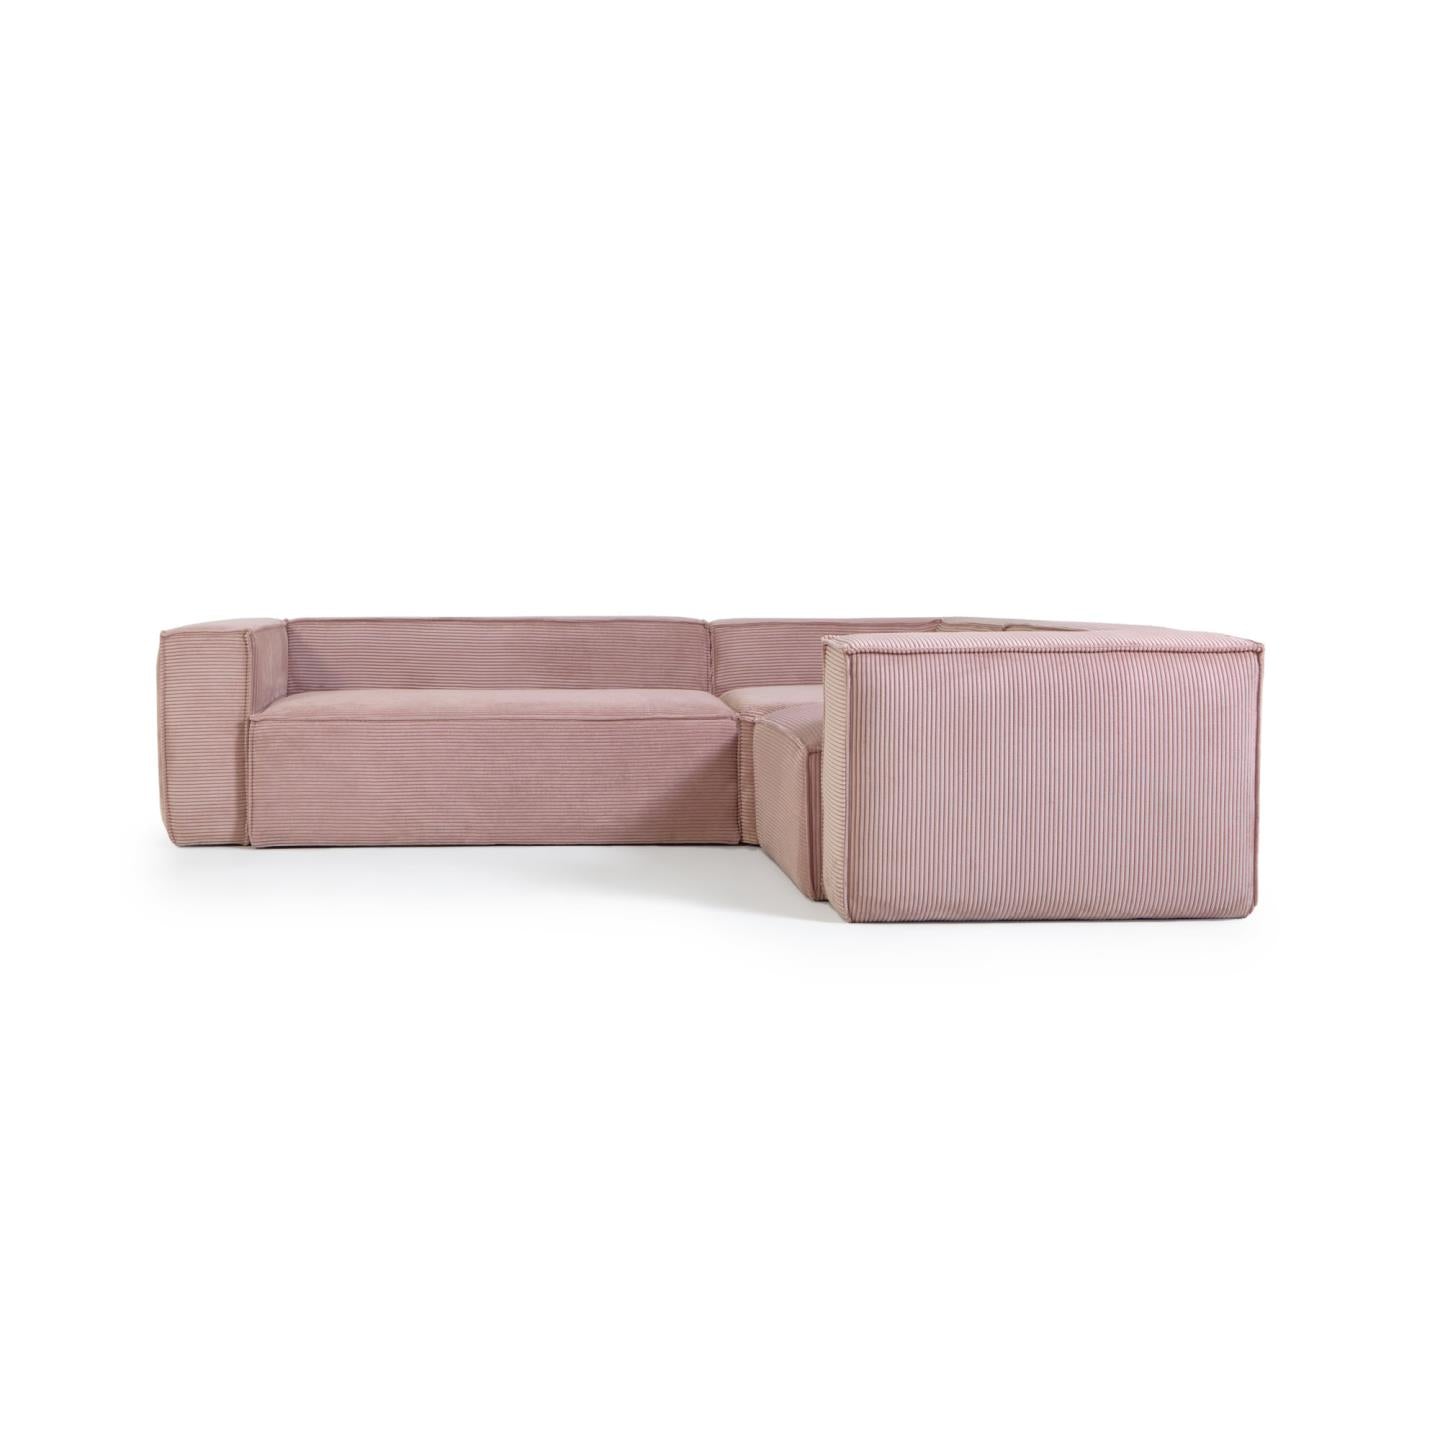 Blok 3 seater corner sofa in pink wide seam corduroy, 290 x 230 cm / 230 cm 290 cm